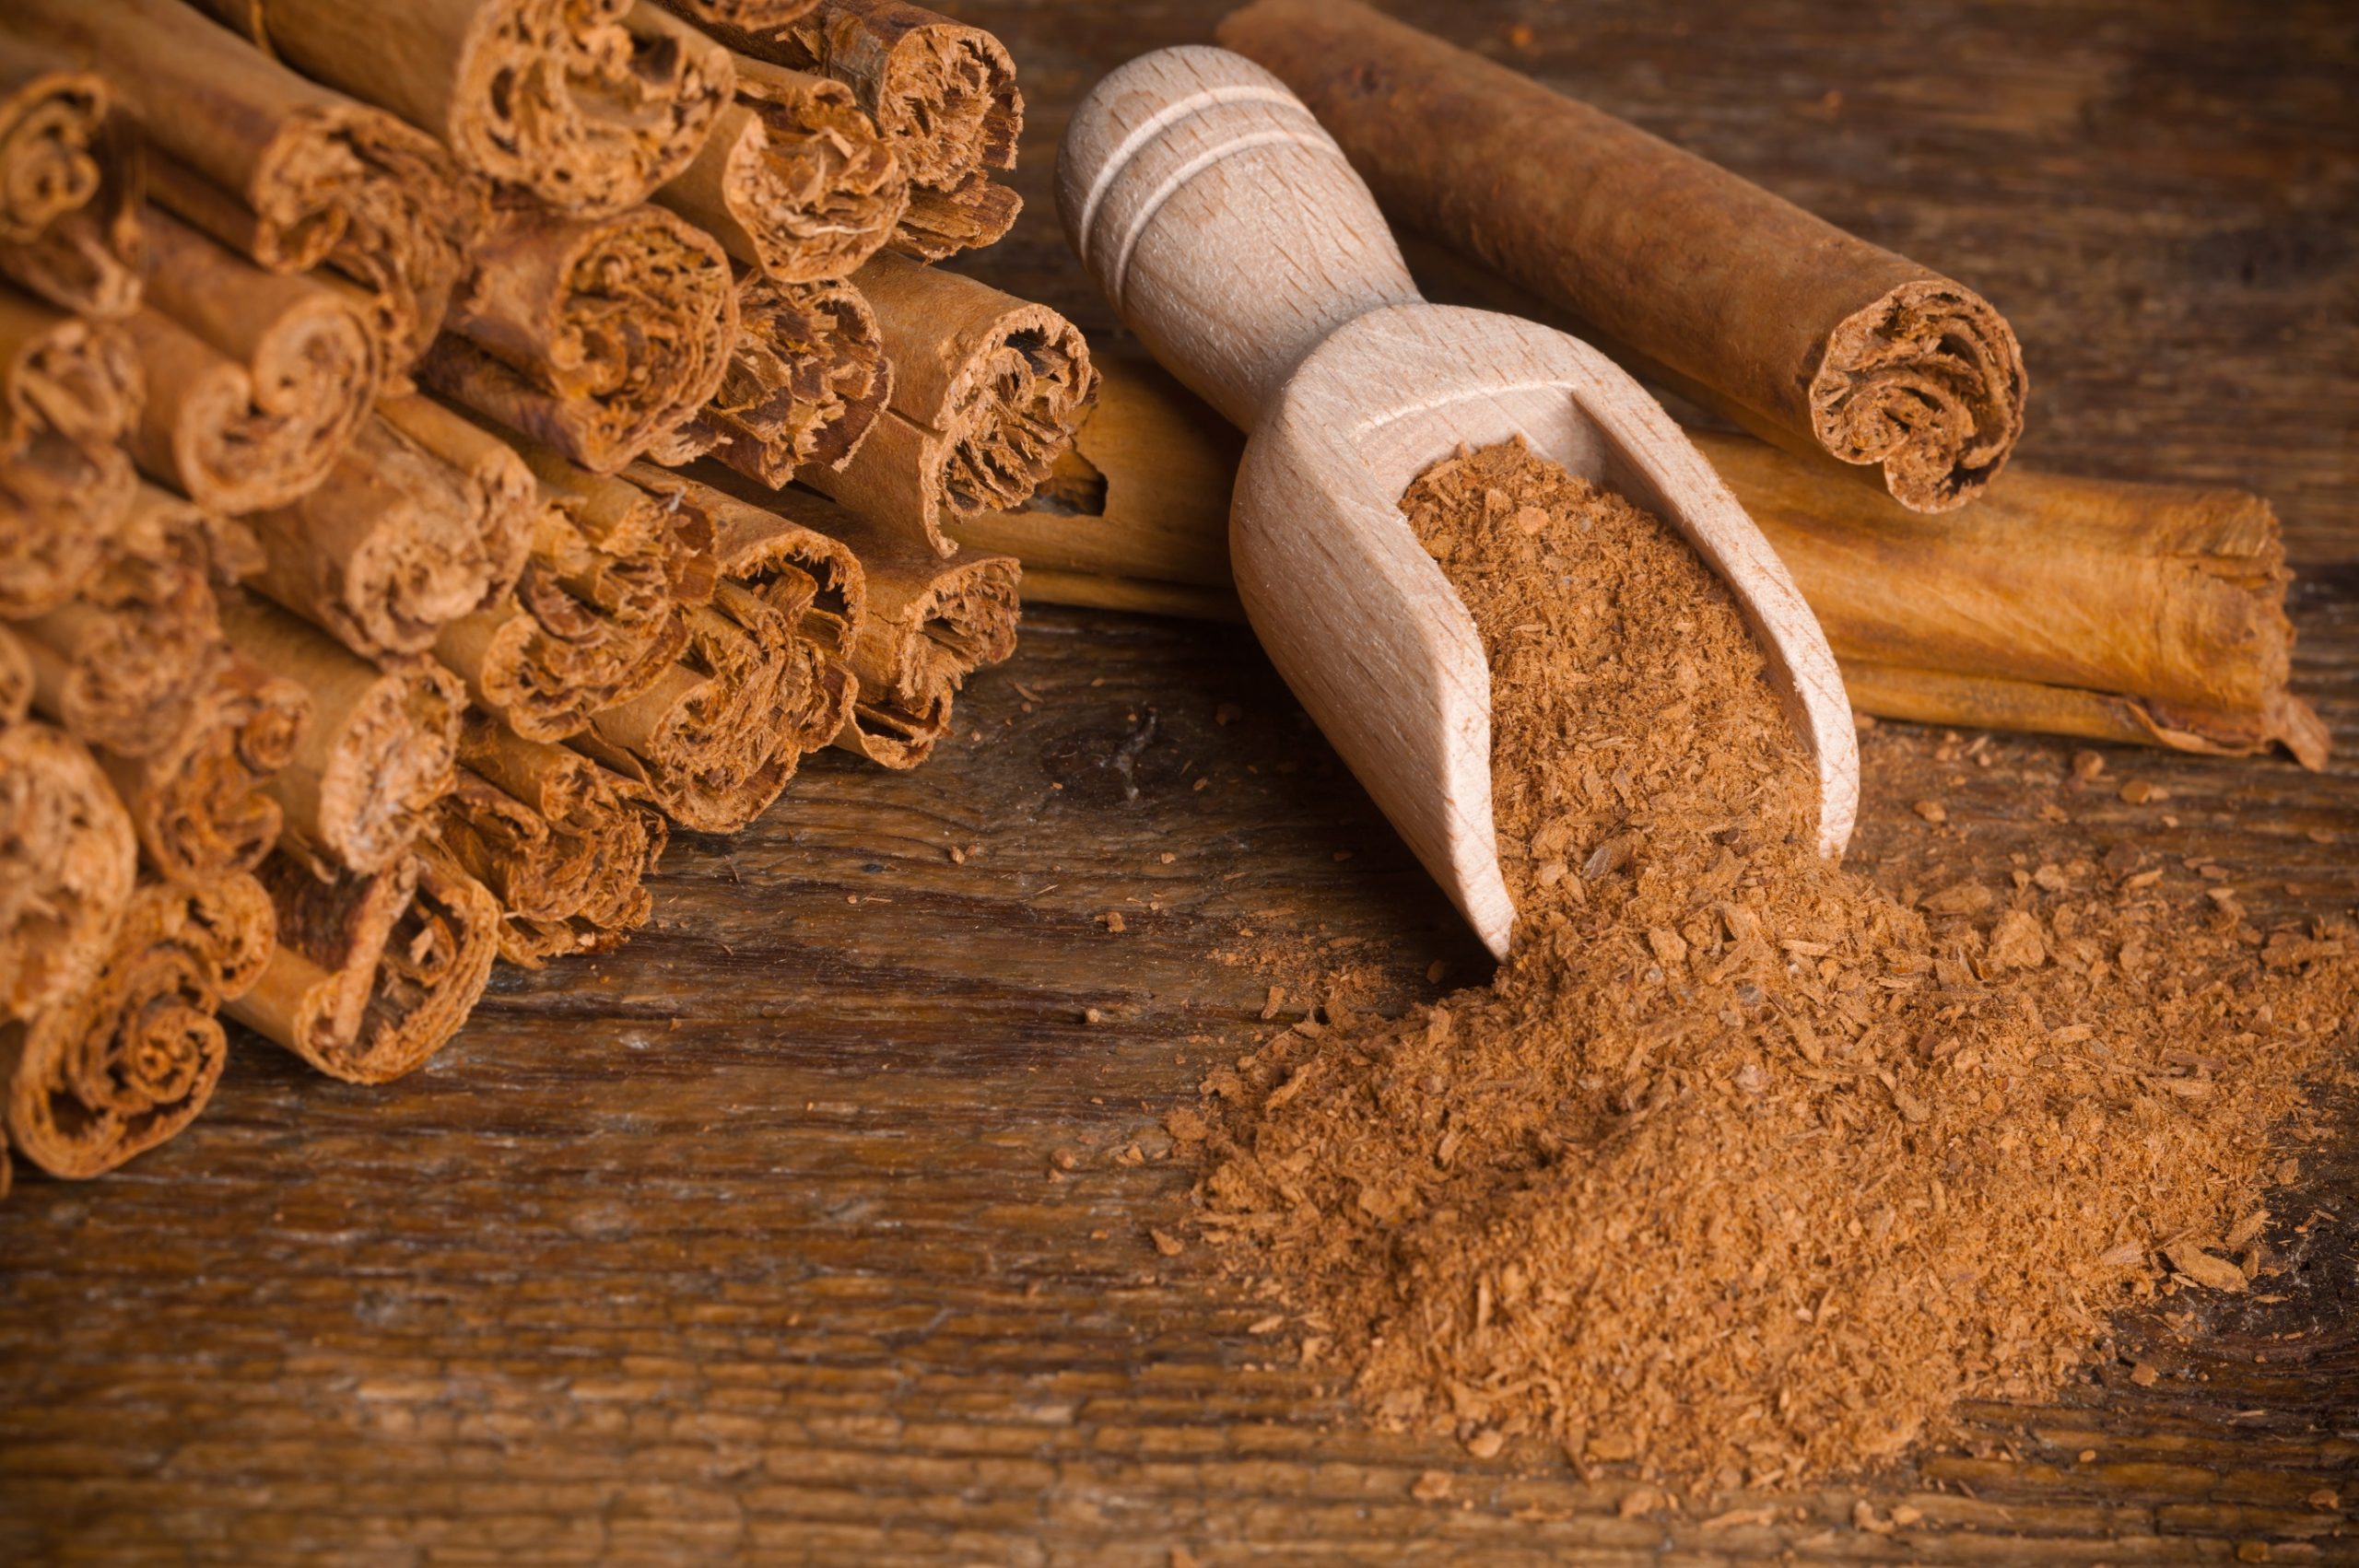 Medicinal plants: Cinnamon can improve blood sugar levels